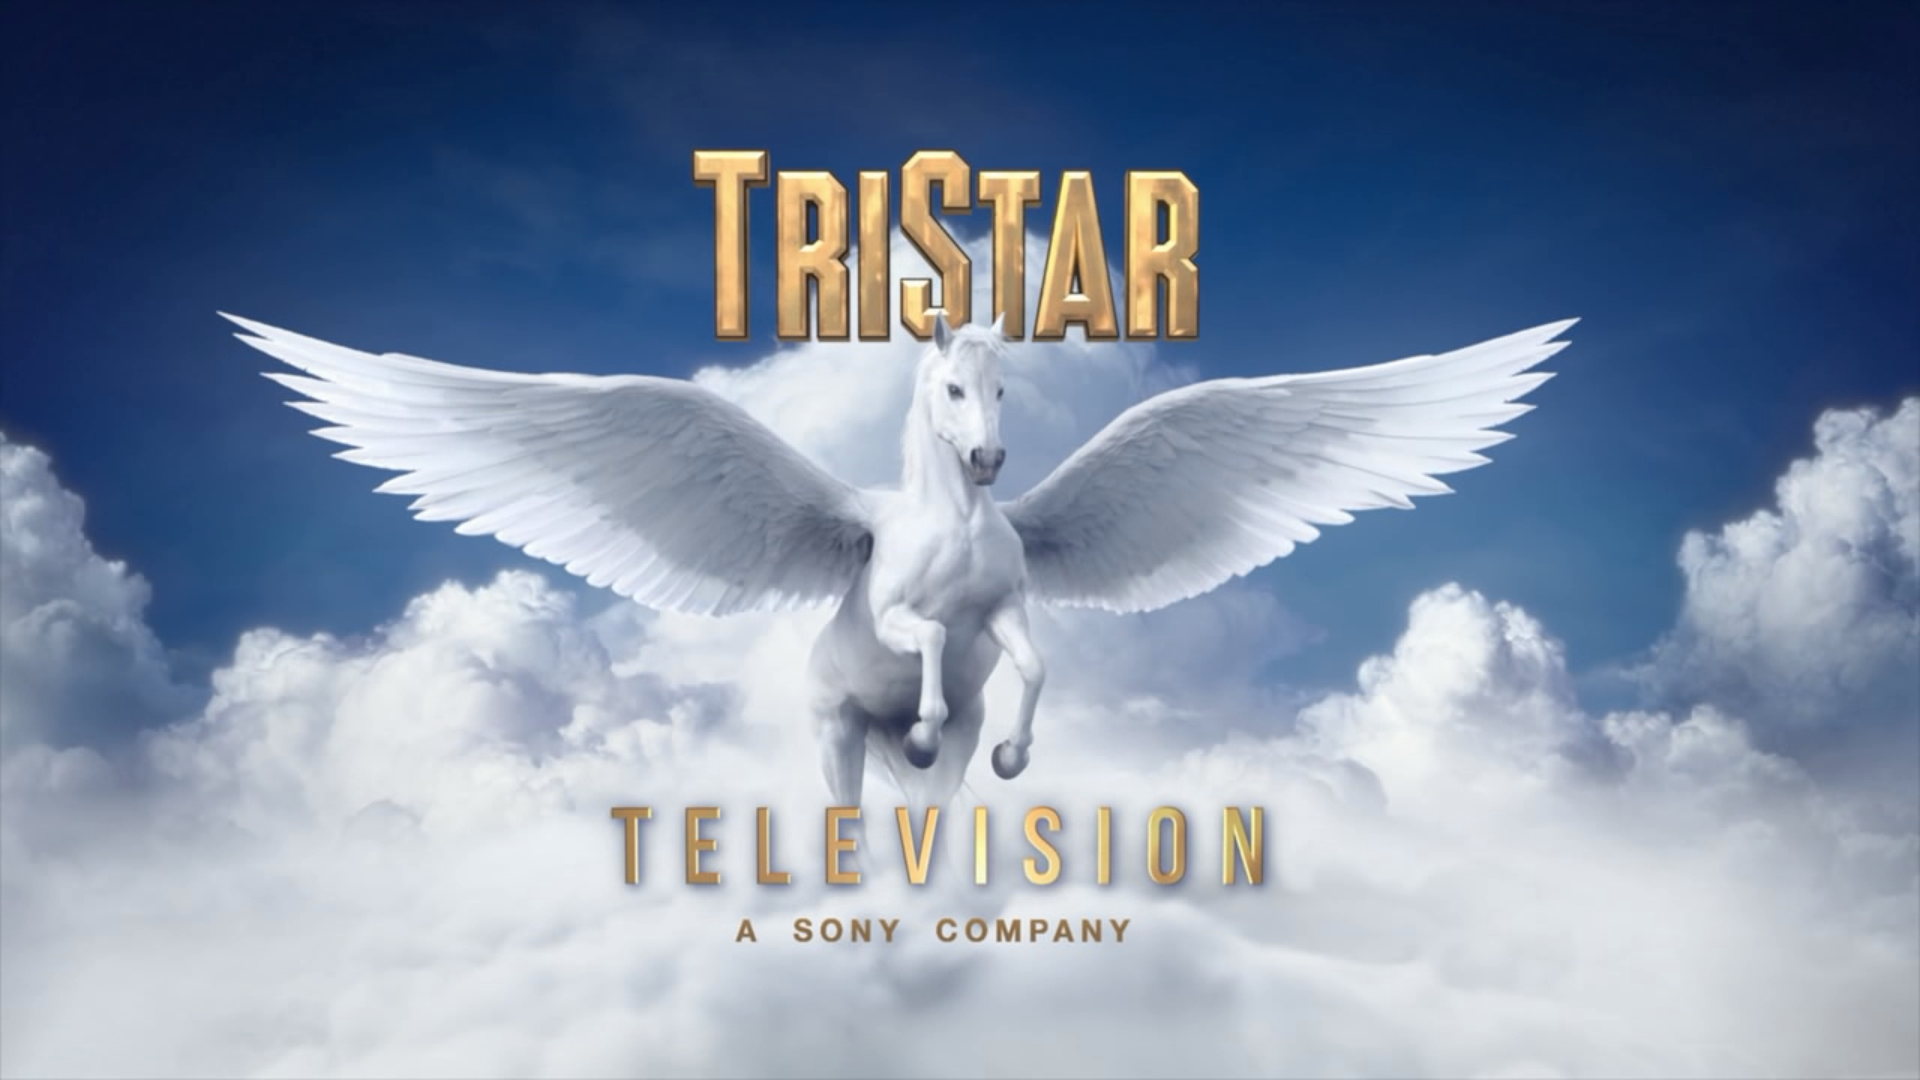 Tristar Television Sony Pictures Entertaiment Wiki Fandom